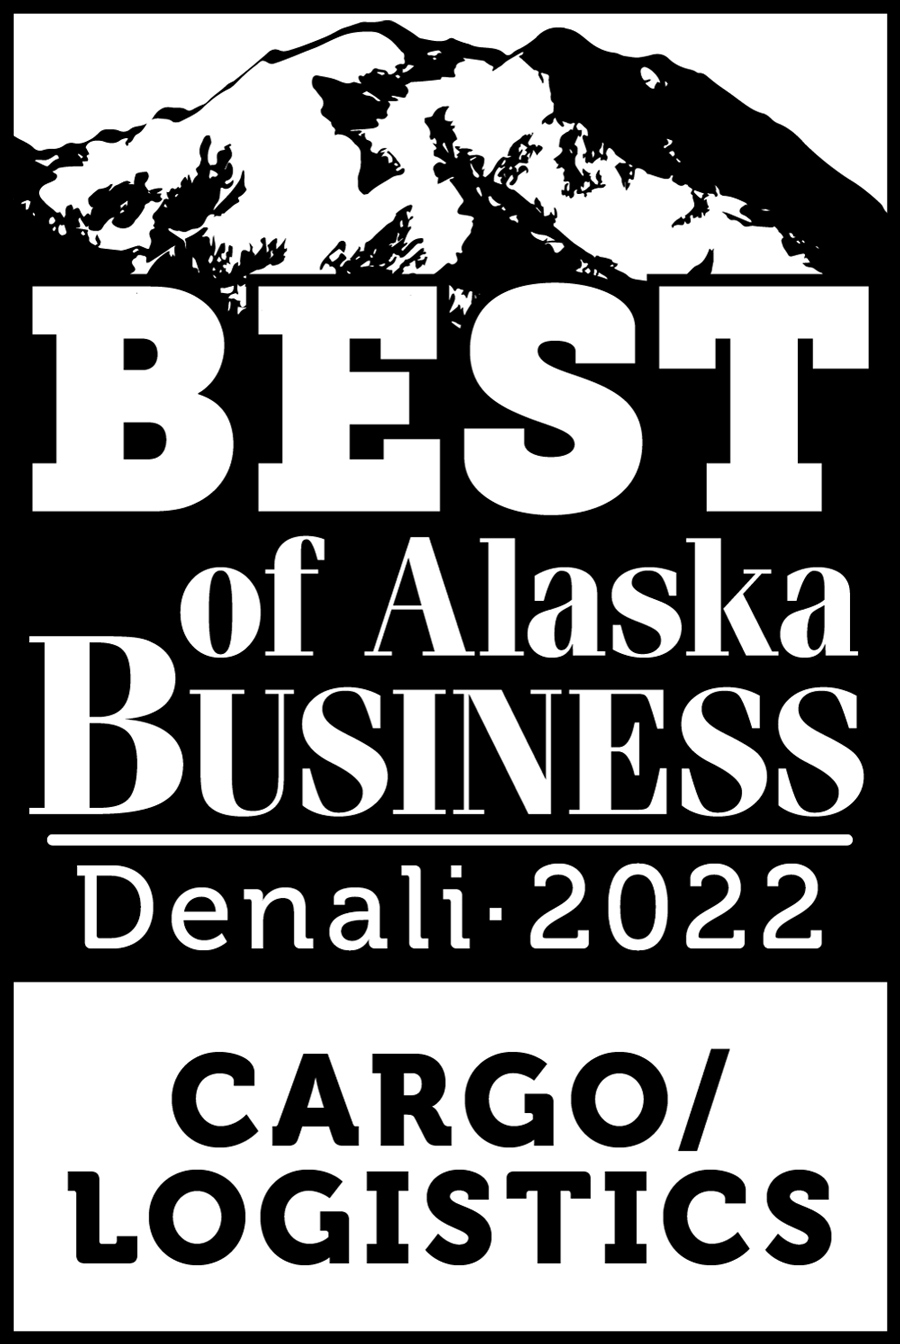 Best of Alaska Business Denali 2022 Cargo/Logistics logo